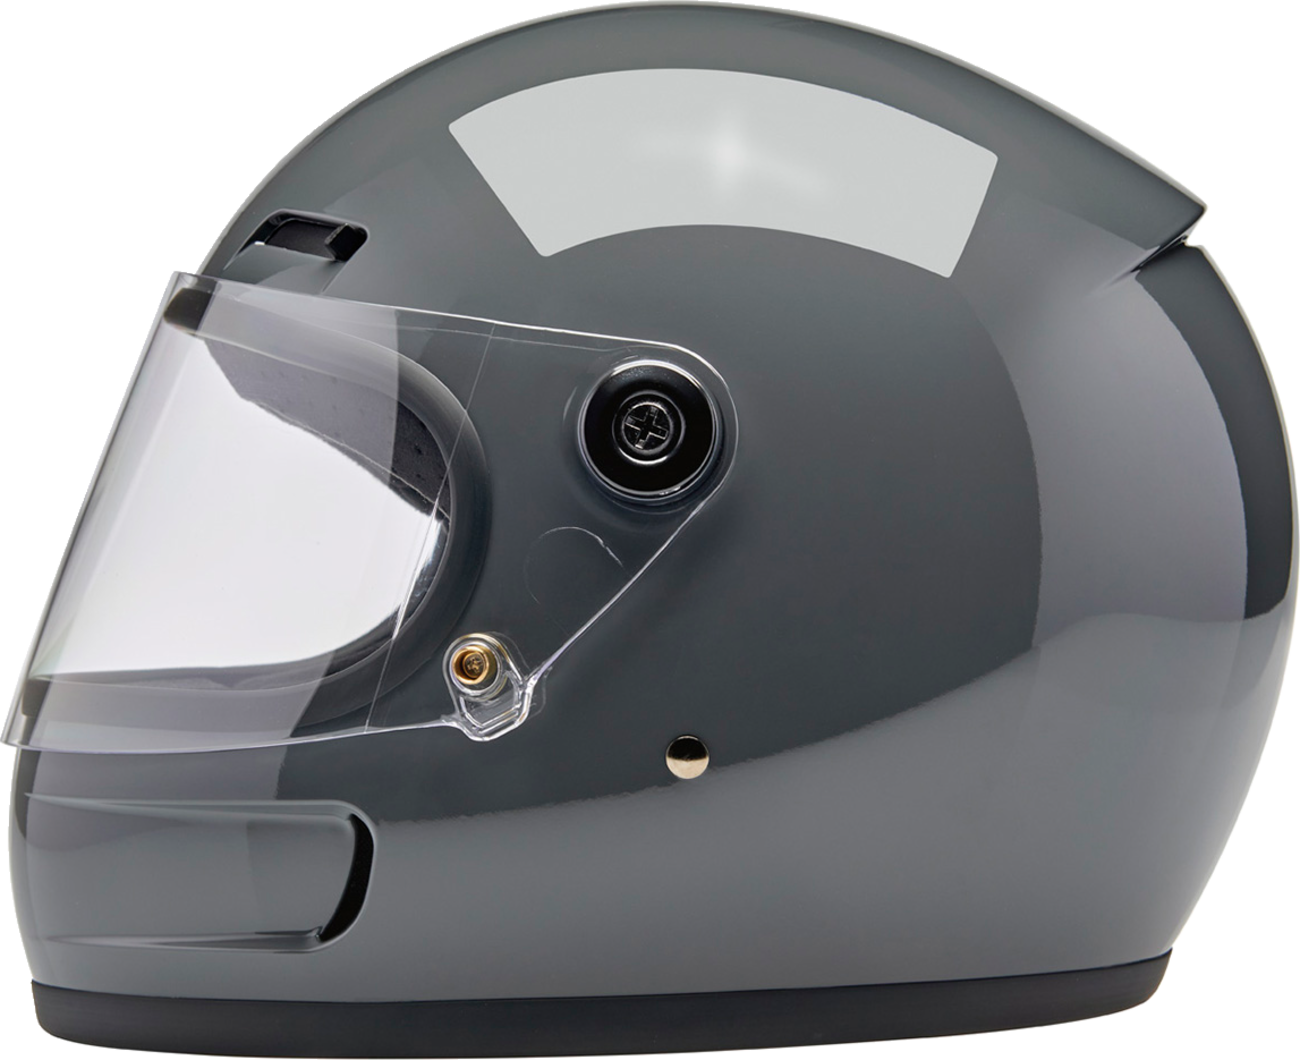 BILTWELL Gringo SV Helmet - Gloss Storm Gray - XS 1006-109-501